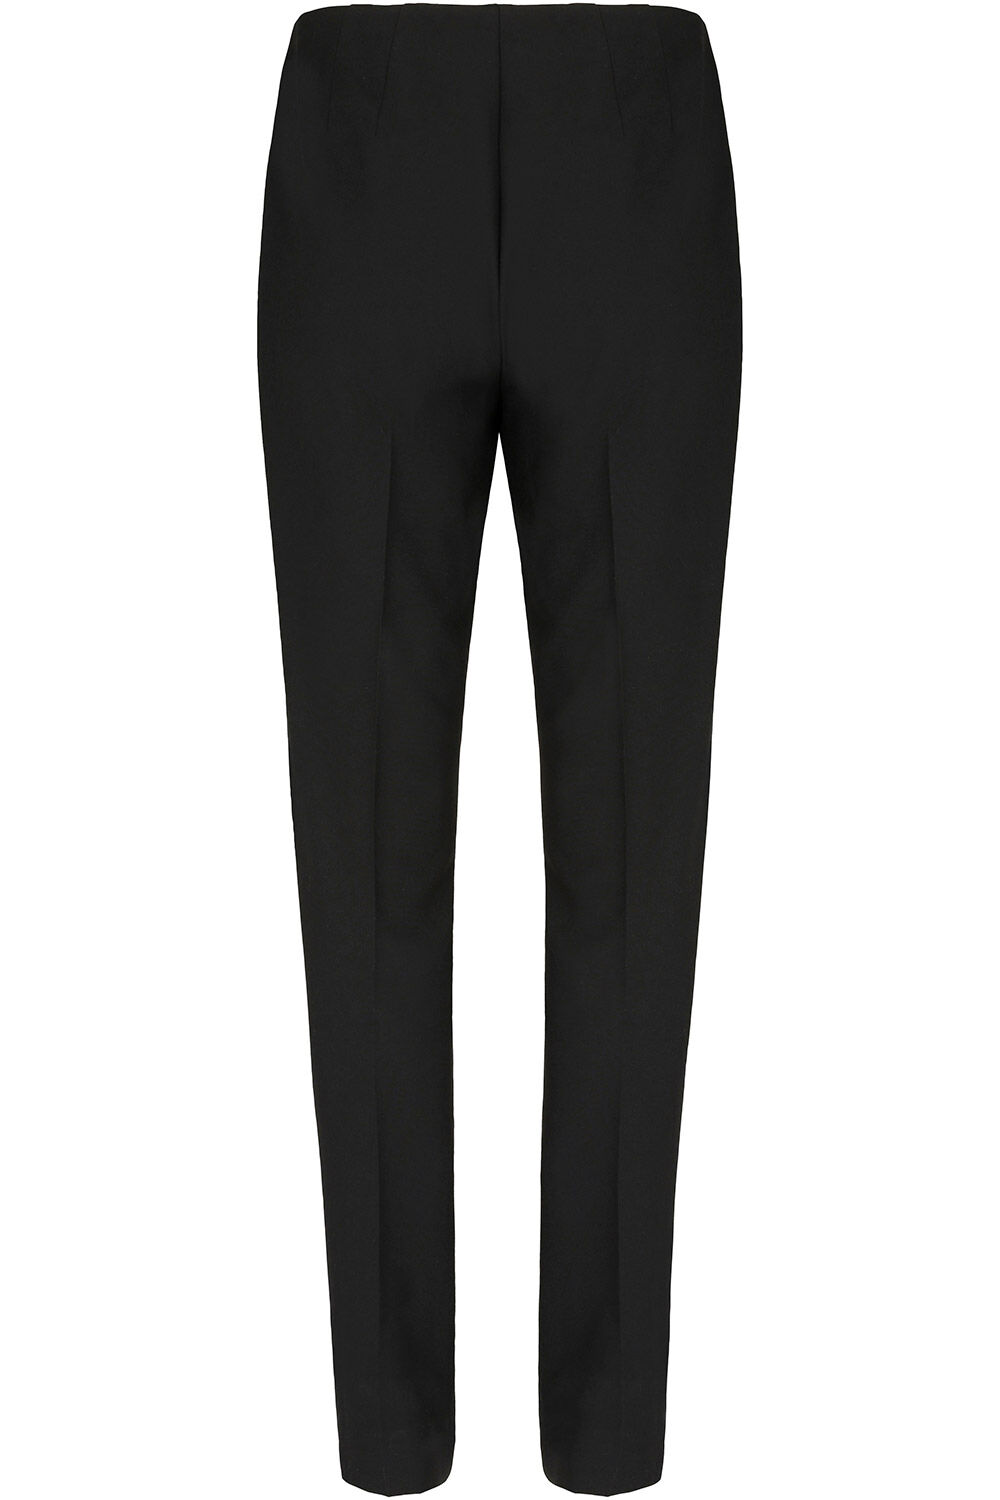 Black Cargo trousers with zip detailing  Buy Online  Terranova